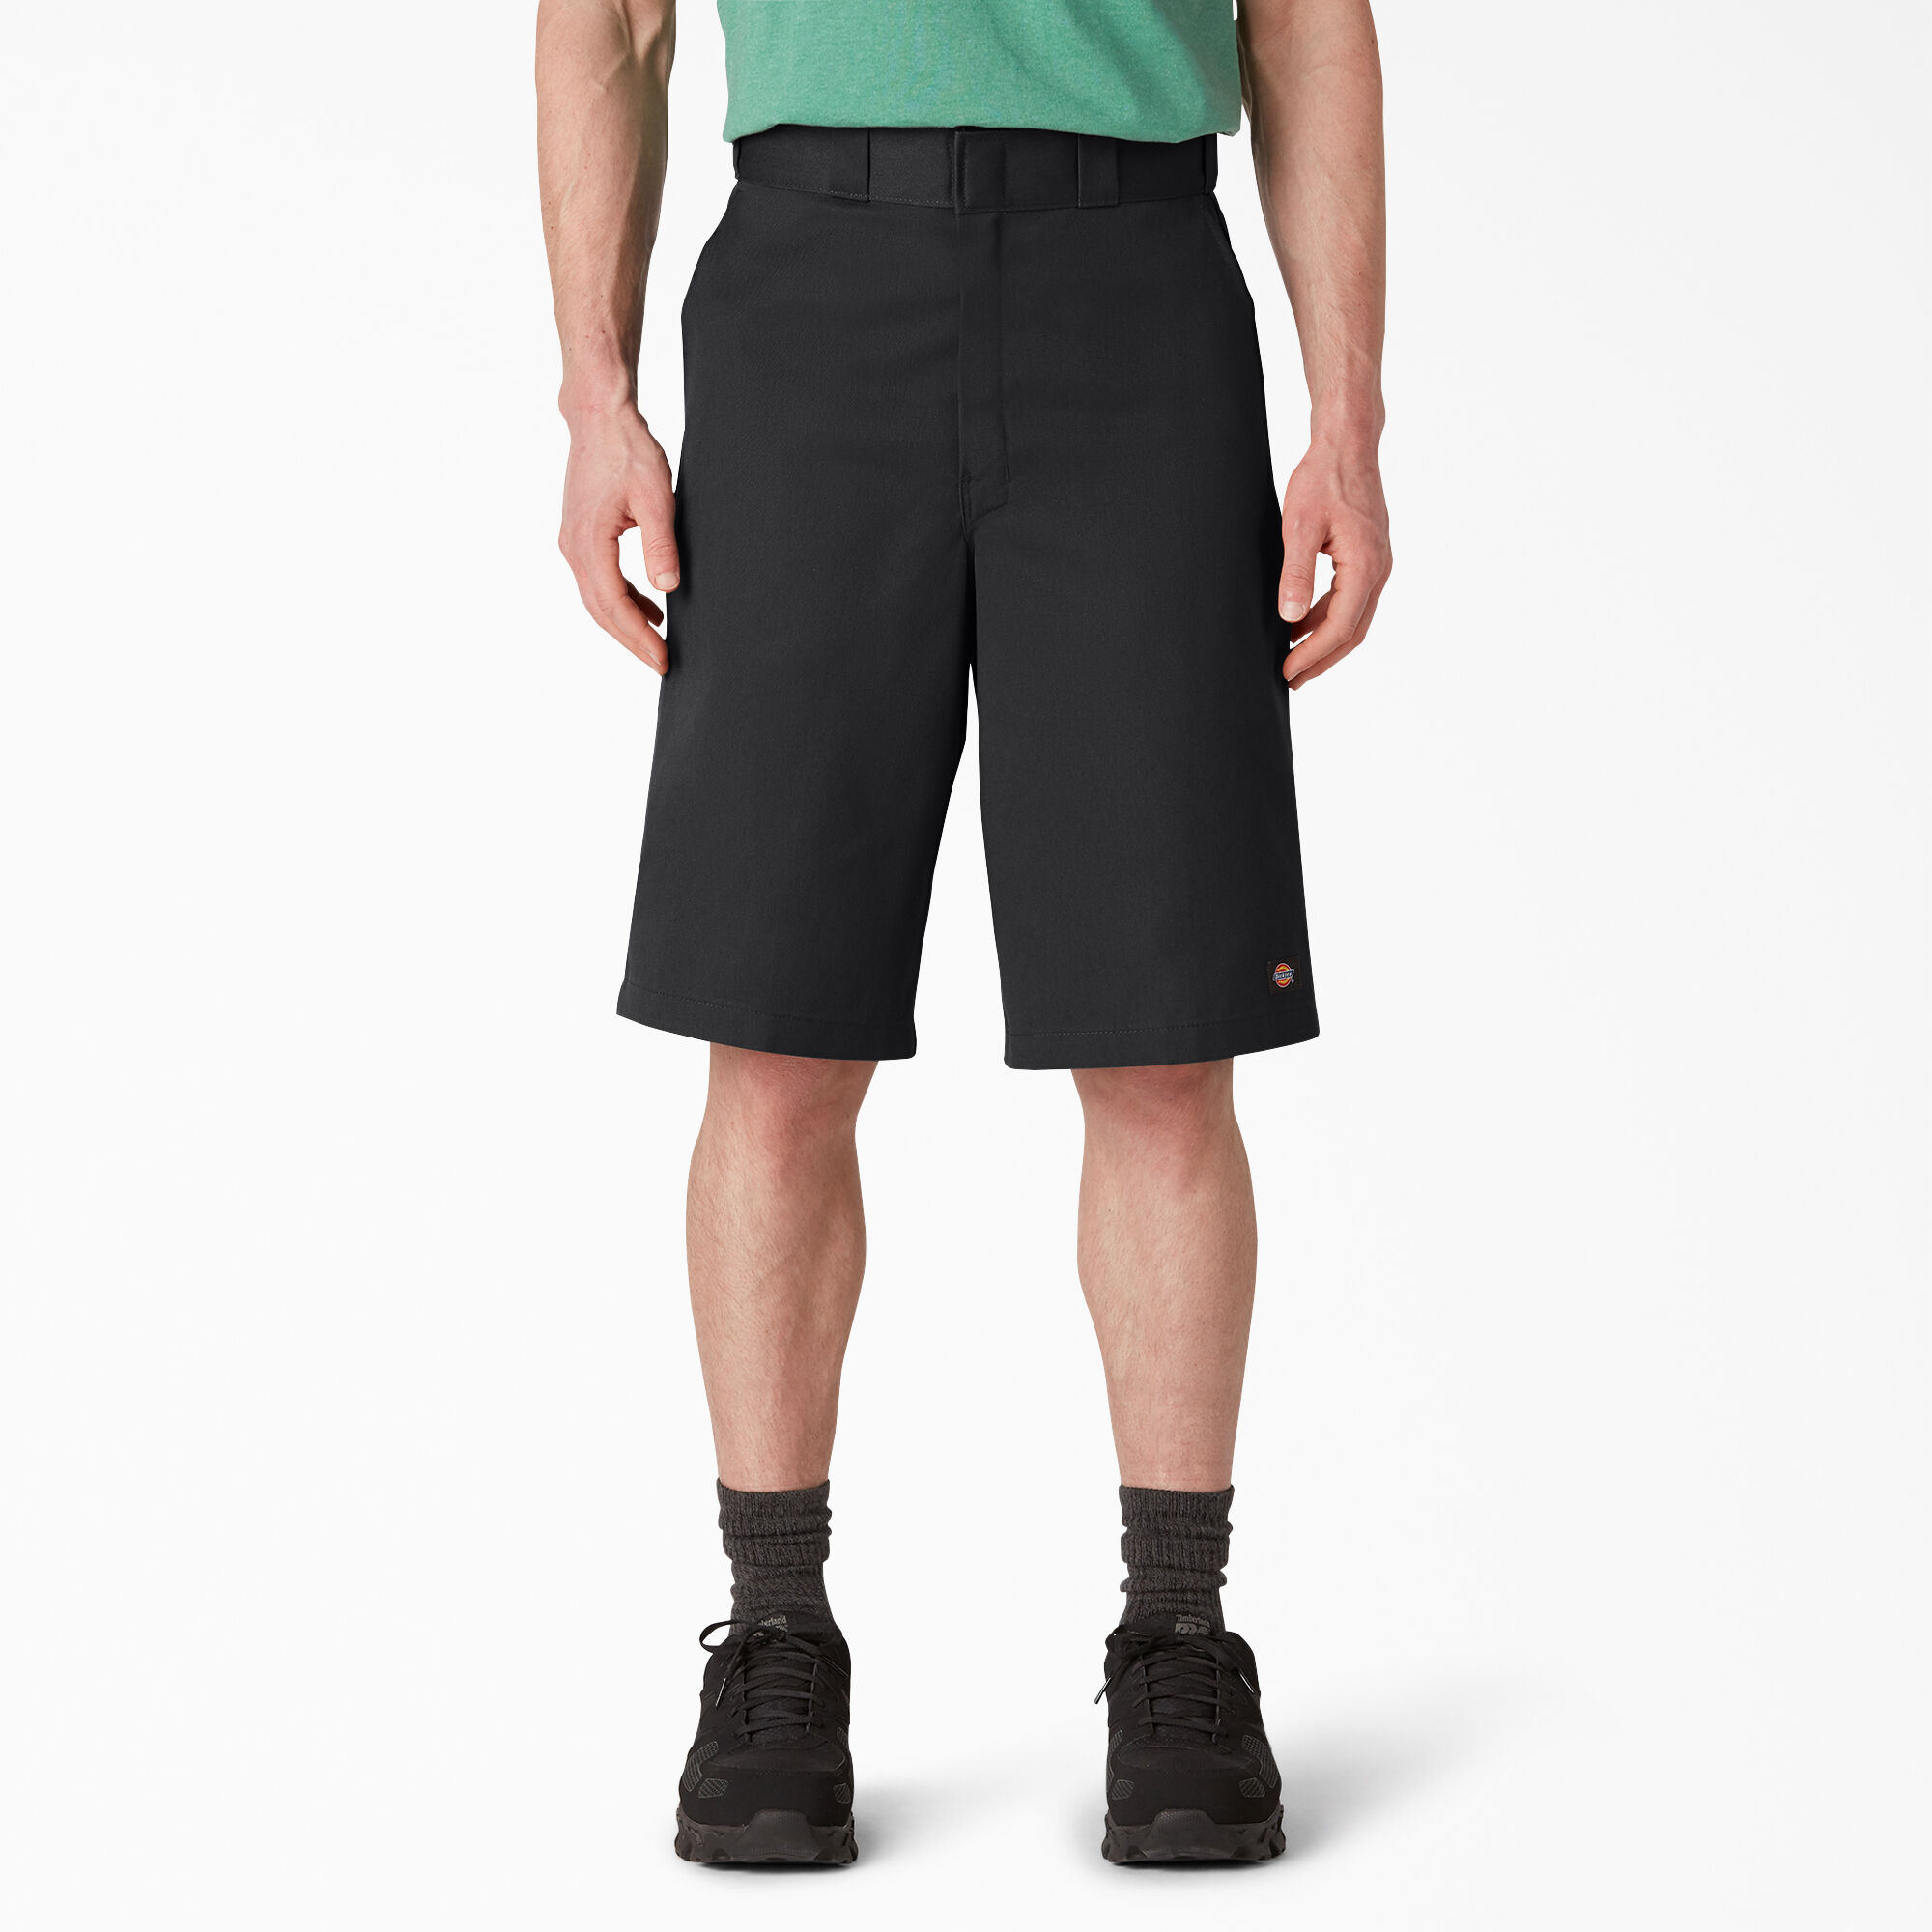 Junior Size 13 Khaki Cotton Short Shorts by Dickies NWT 